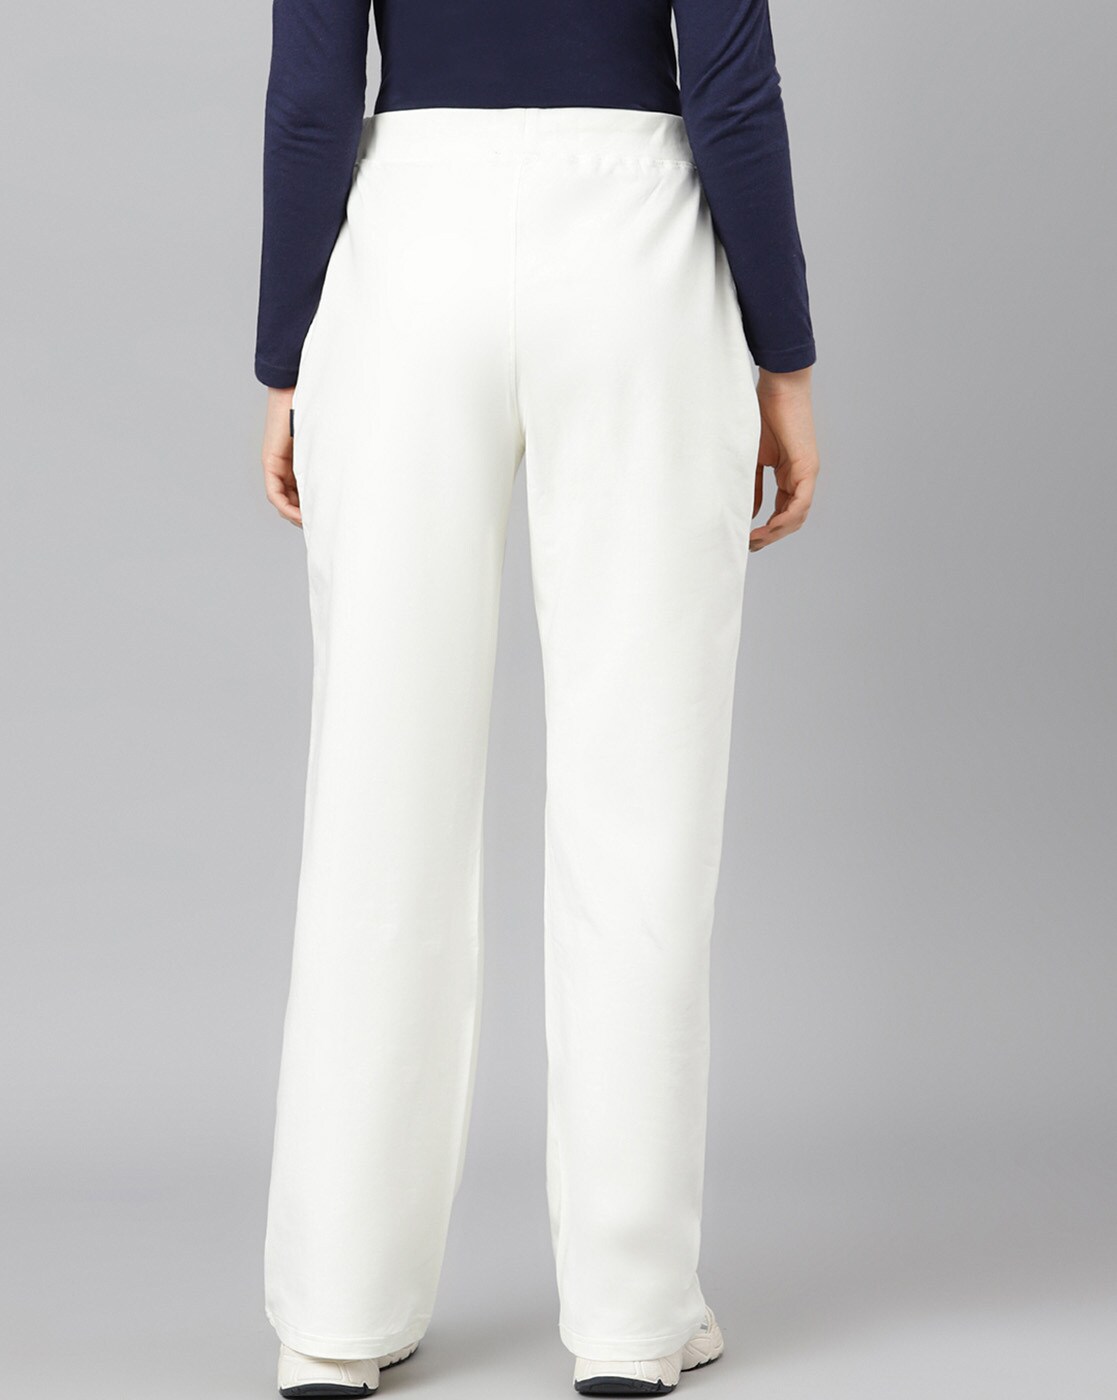 Buy Polo Ralph Lauren Women White Track Pants Online - 668075